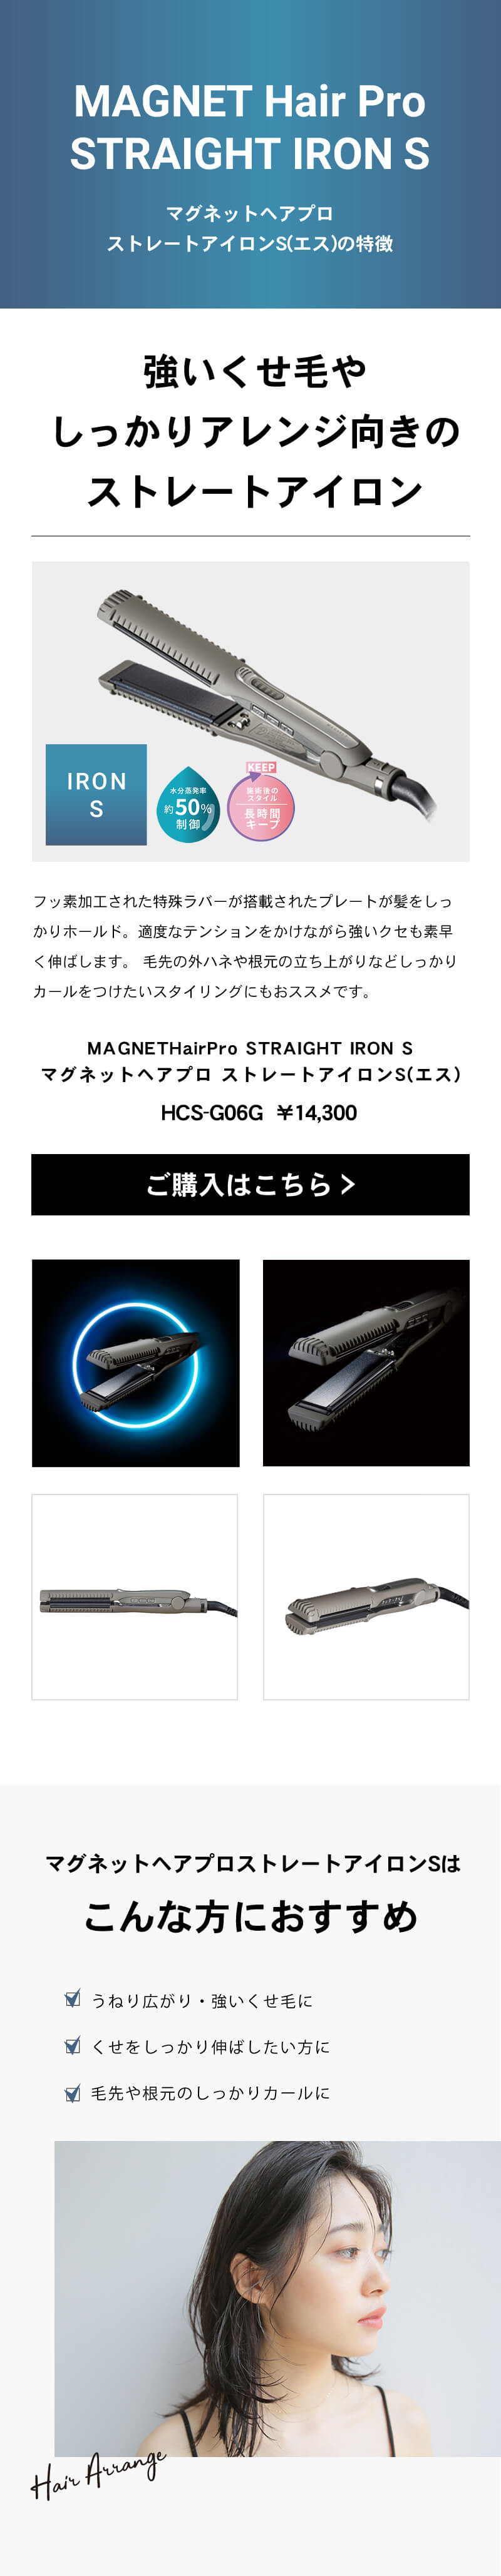 MAGNET Hair Pro STRAIGHT IRON マグネットヘアプロ ストレートアイロン/S